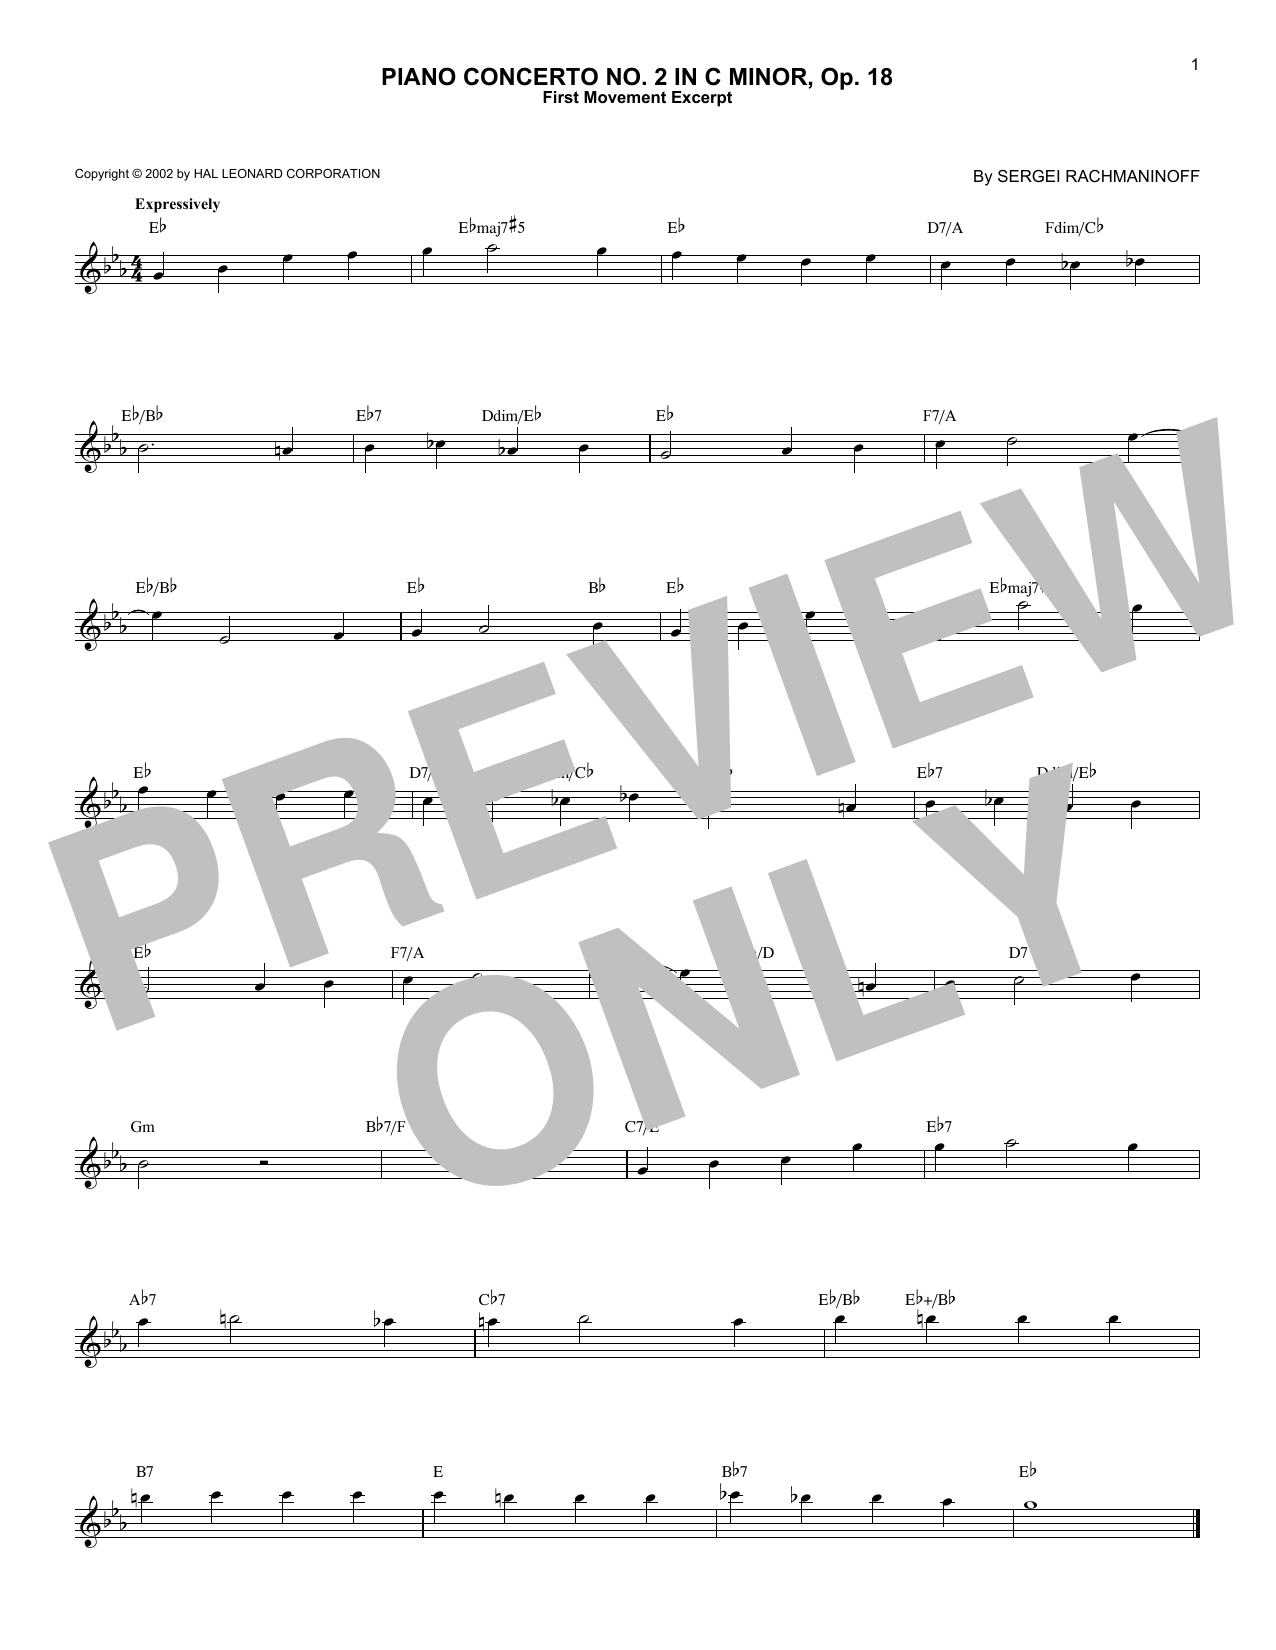 Sergei Rachmaninoff Piano Concerto No. 2 In C Minor, Op. 18 sheet music notes printable PDF score